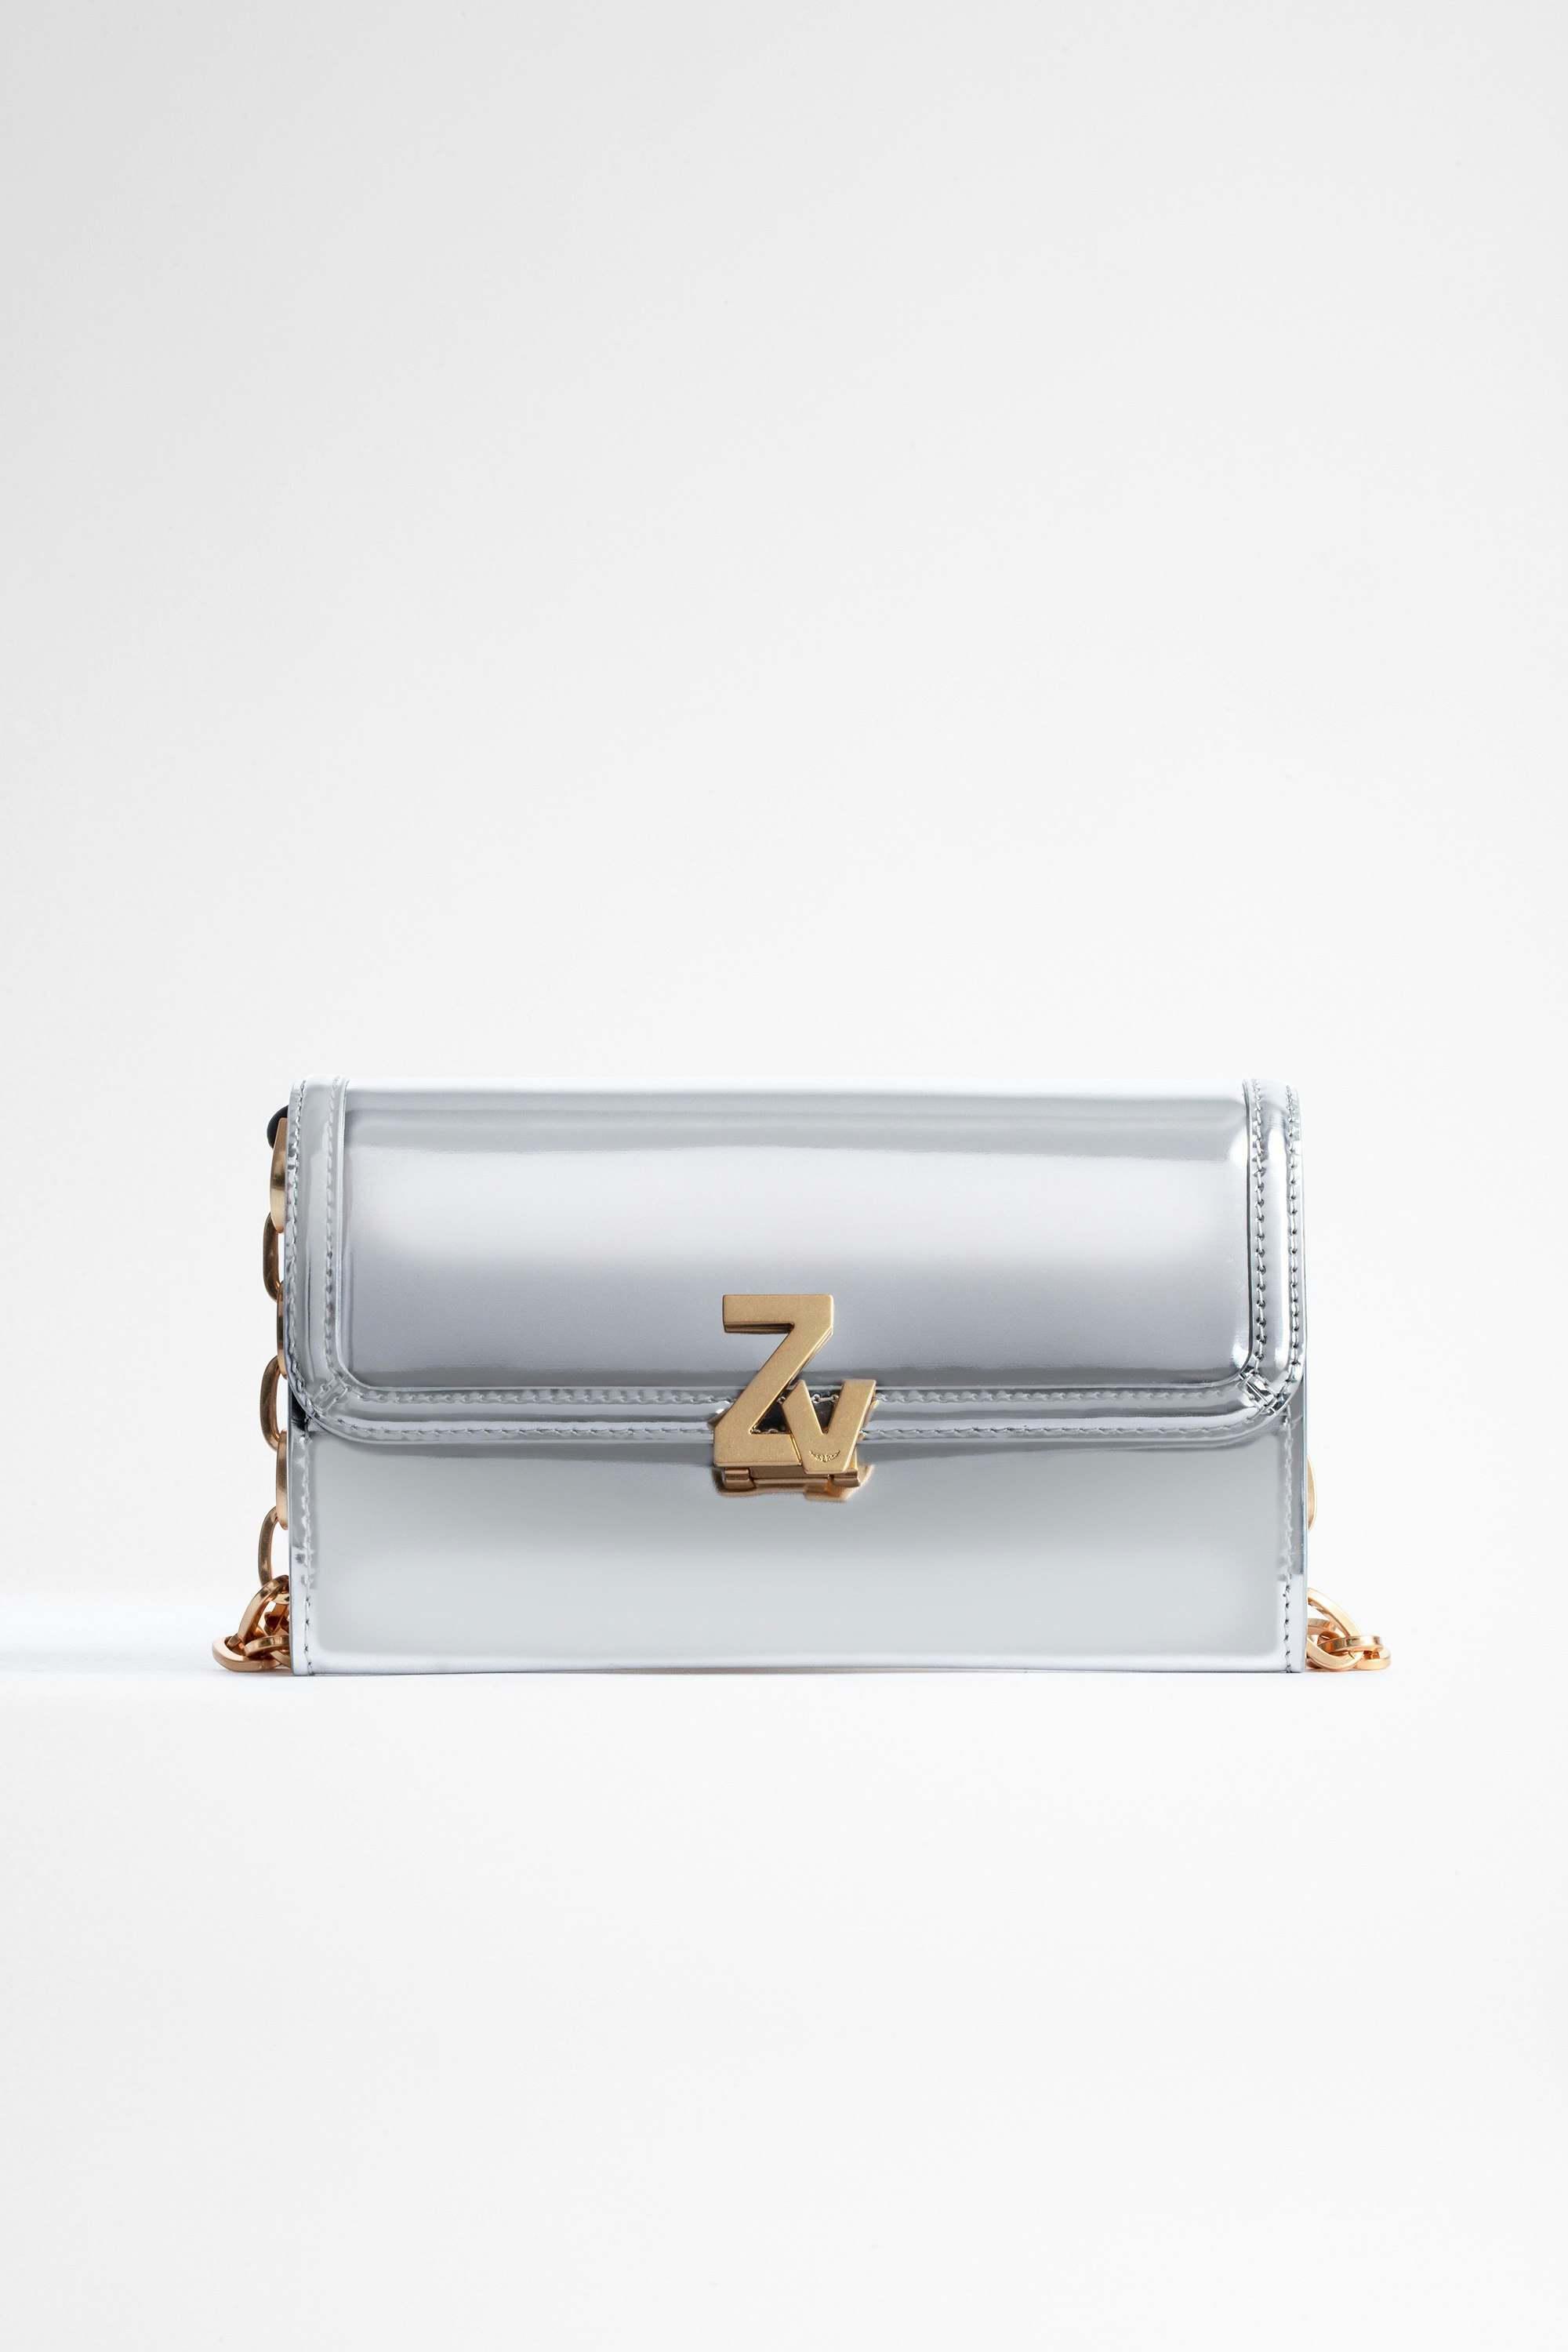 Damentasche Wallet ZV Initiale Le Long Unchained Silberfarbene Damenbrieftasche